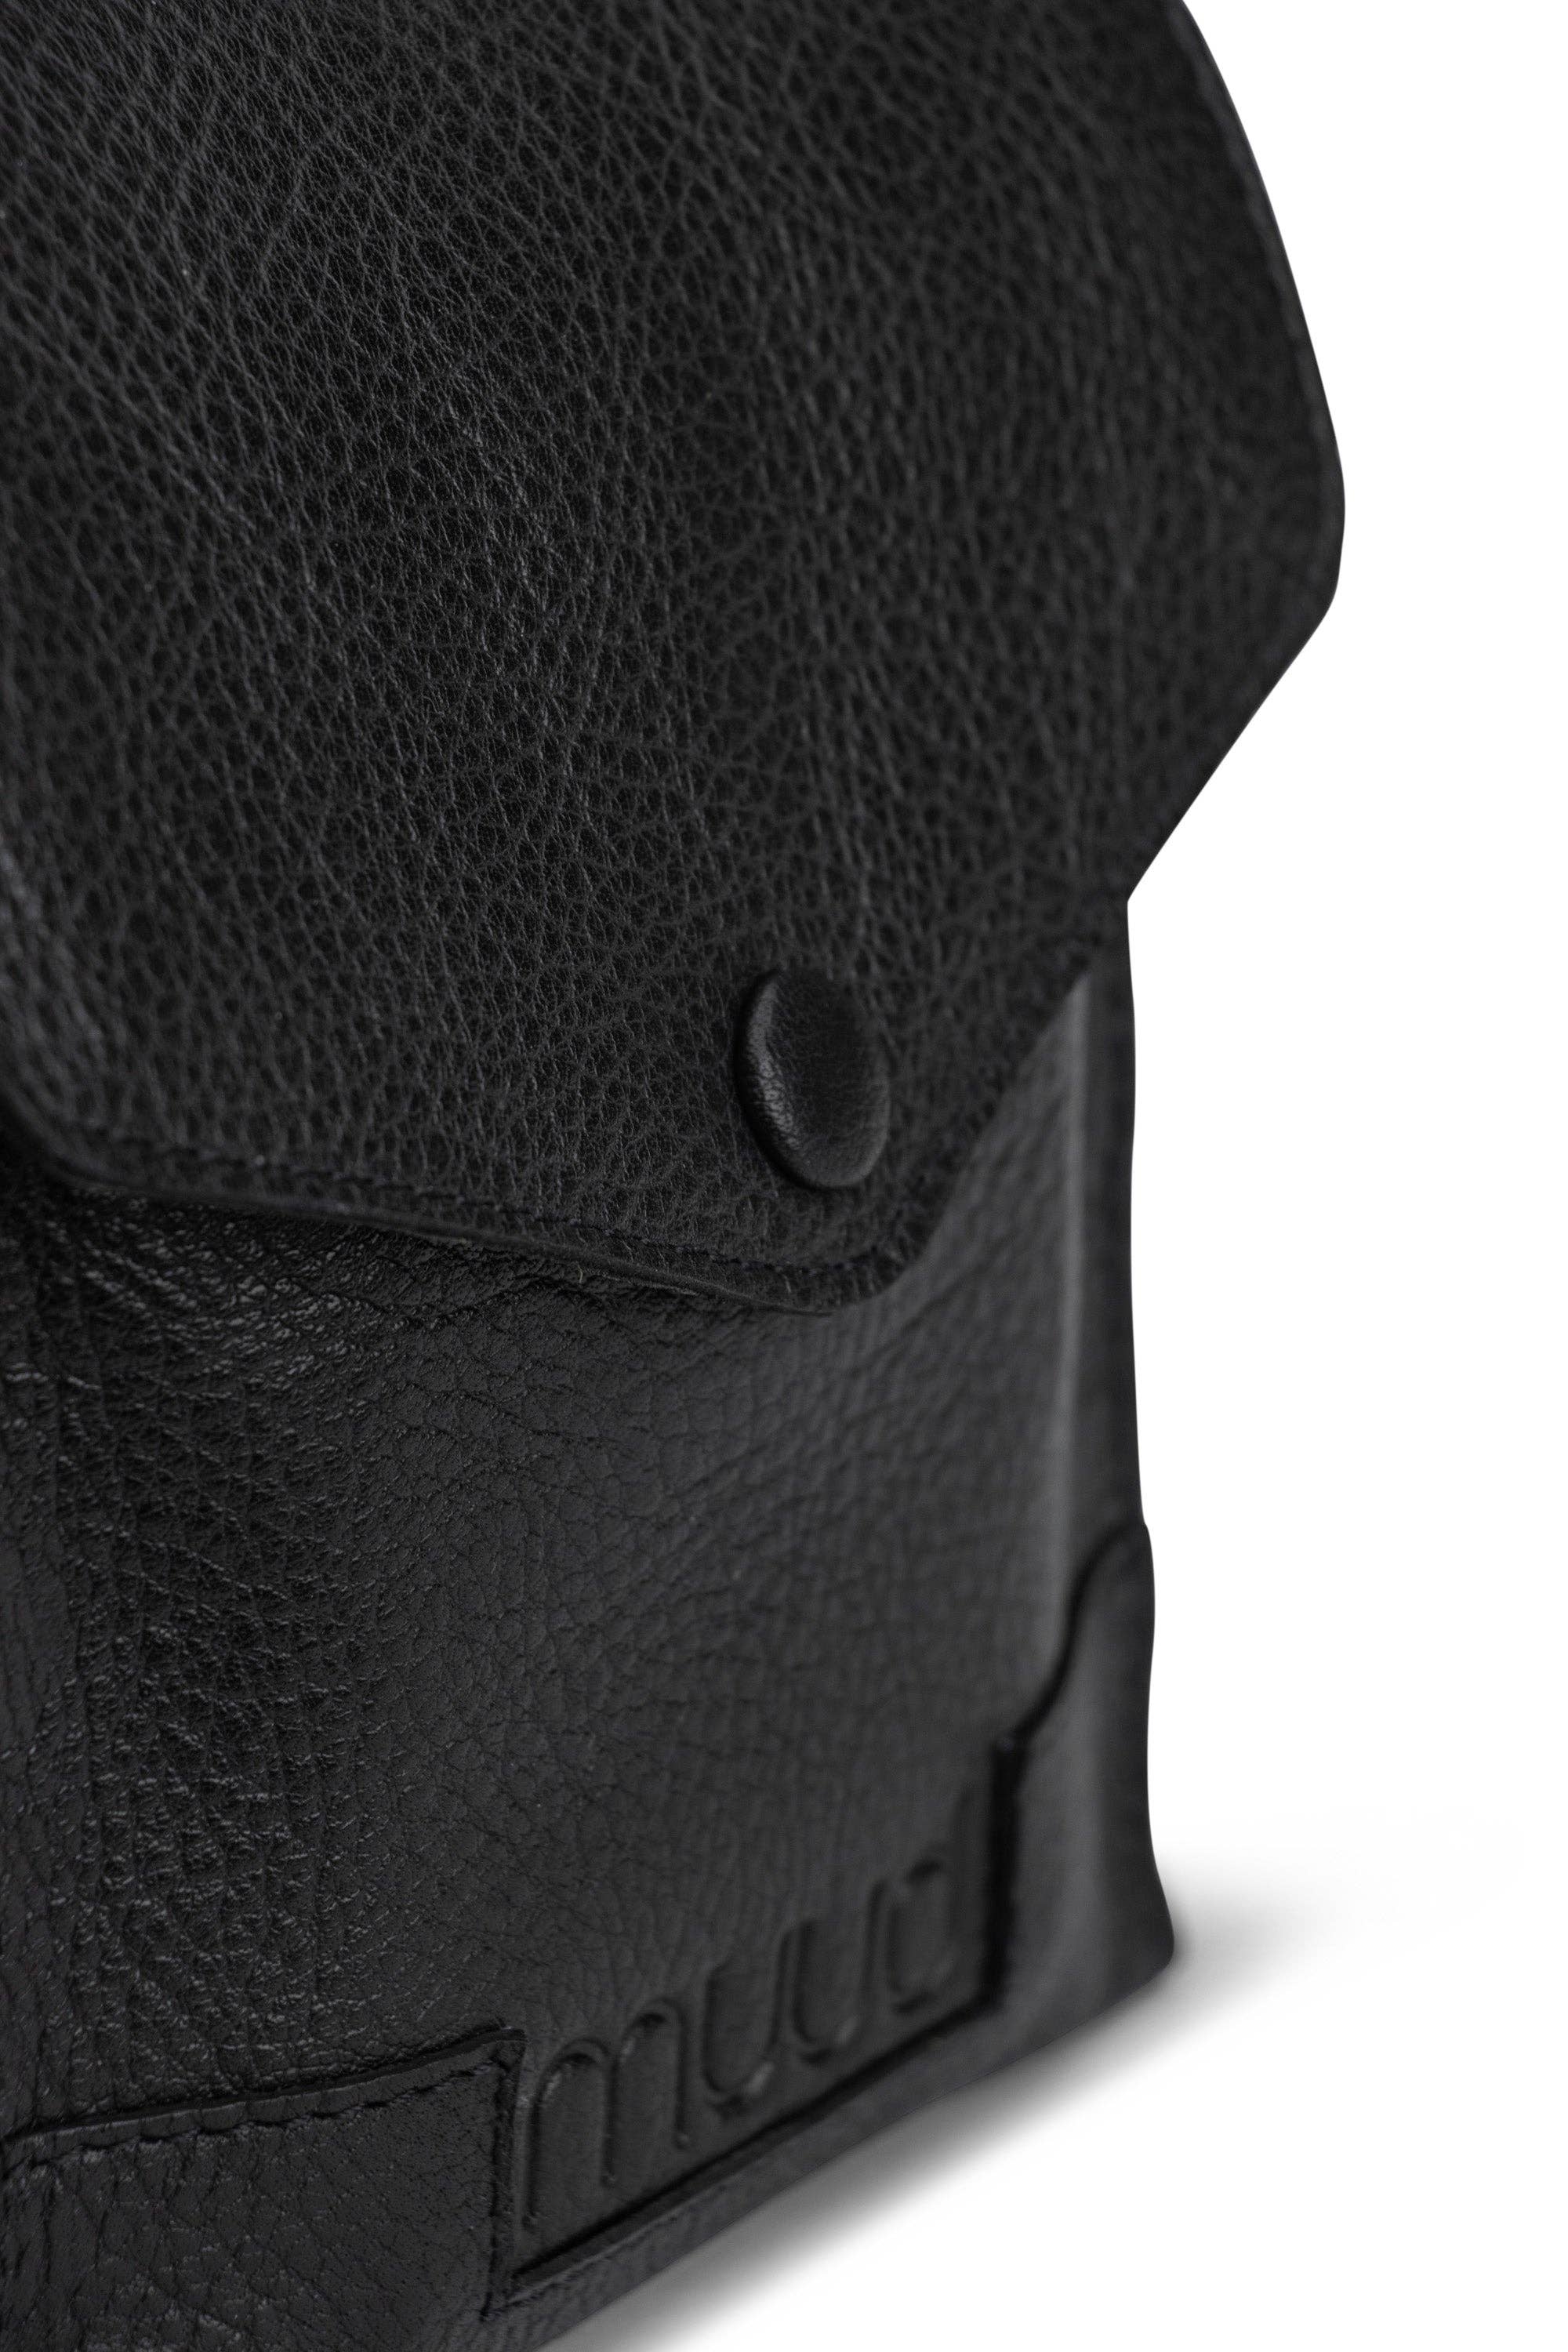 muud Betina Etui - Leather Interchangeable Needle Case